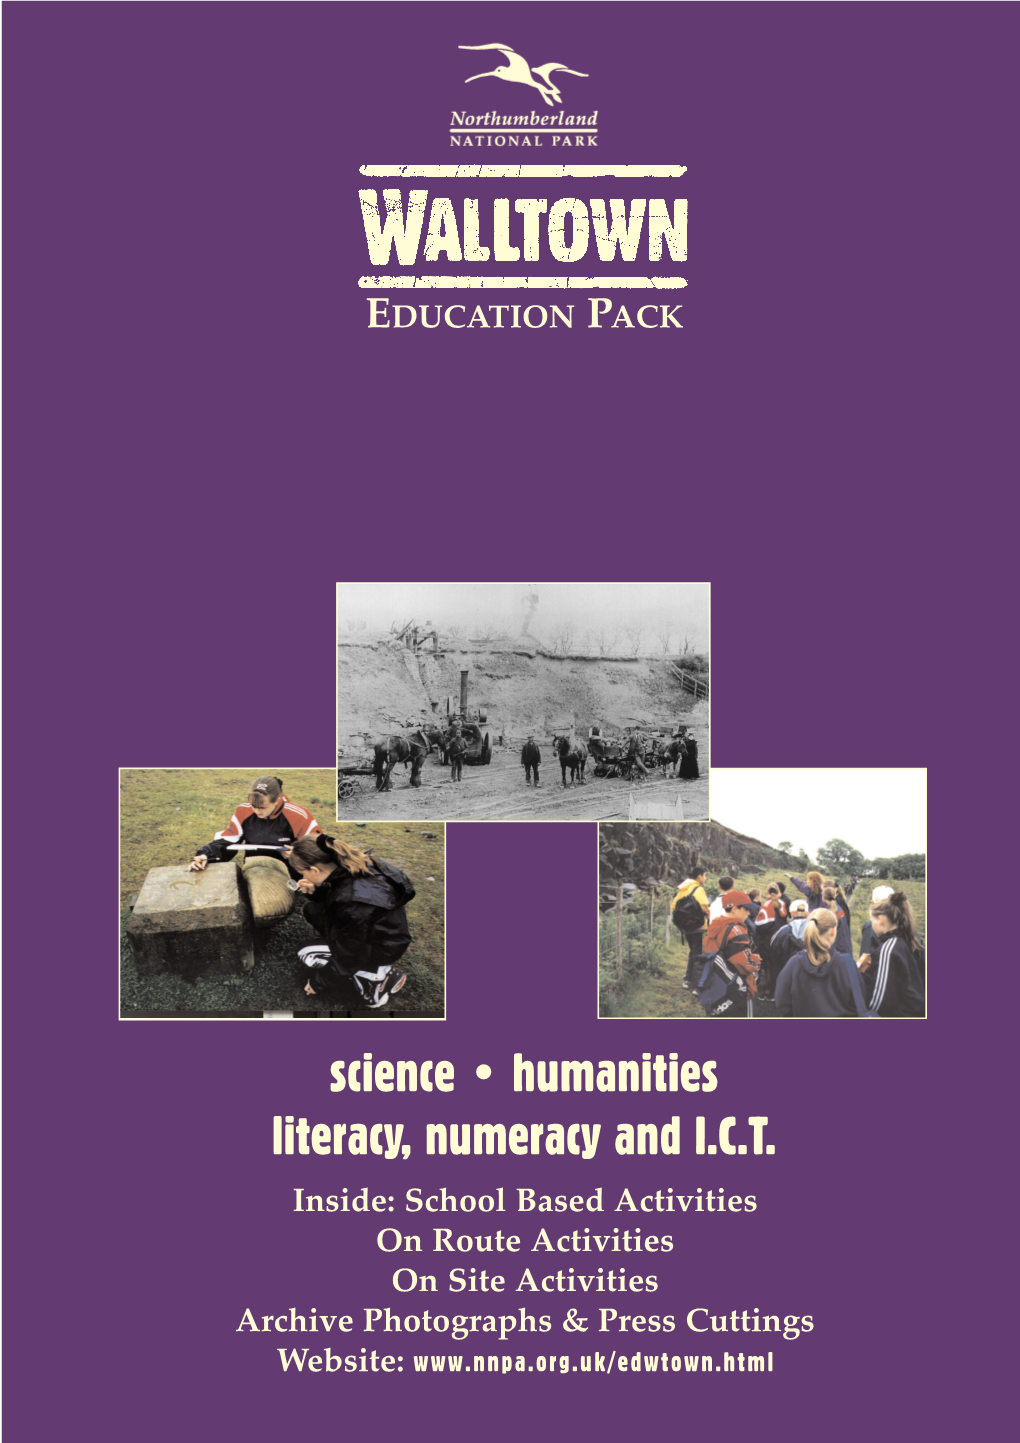 Walltown Education Pack